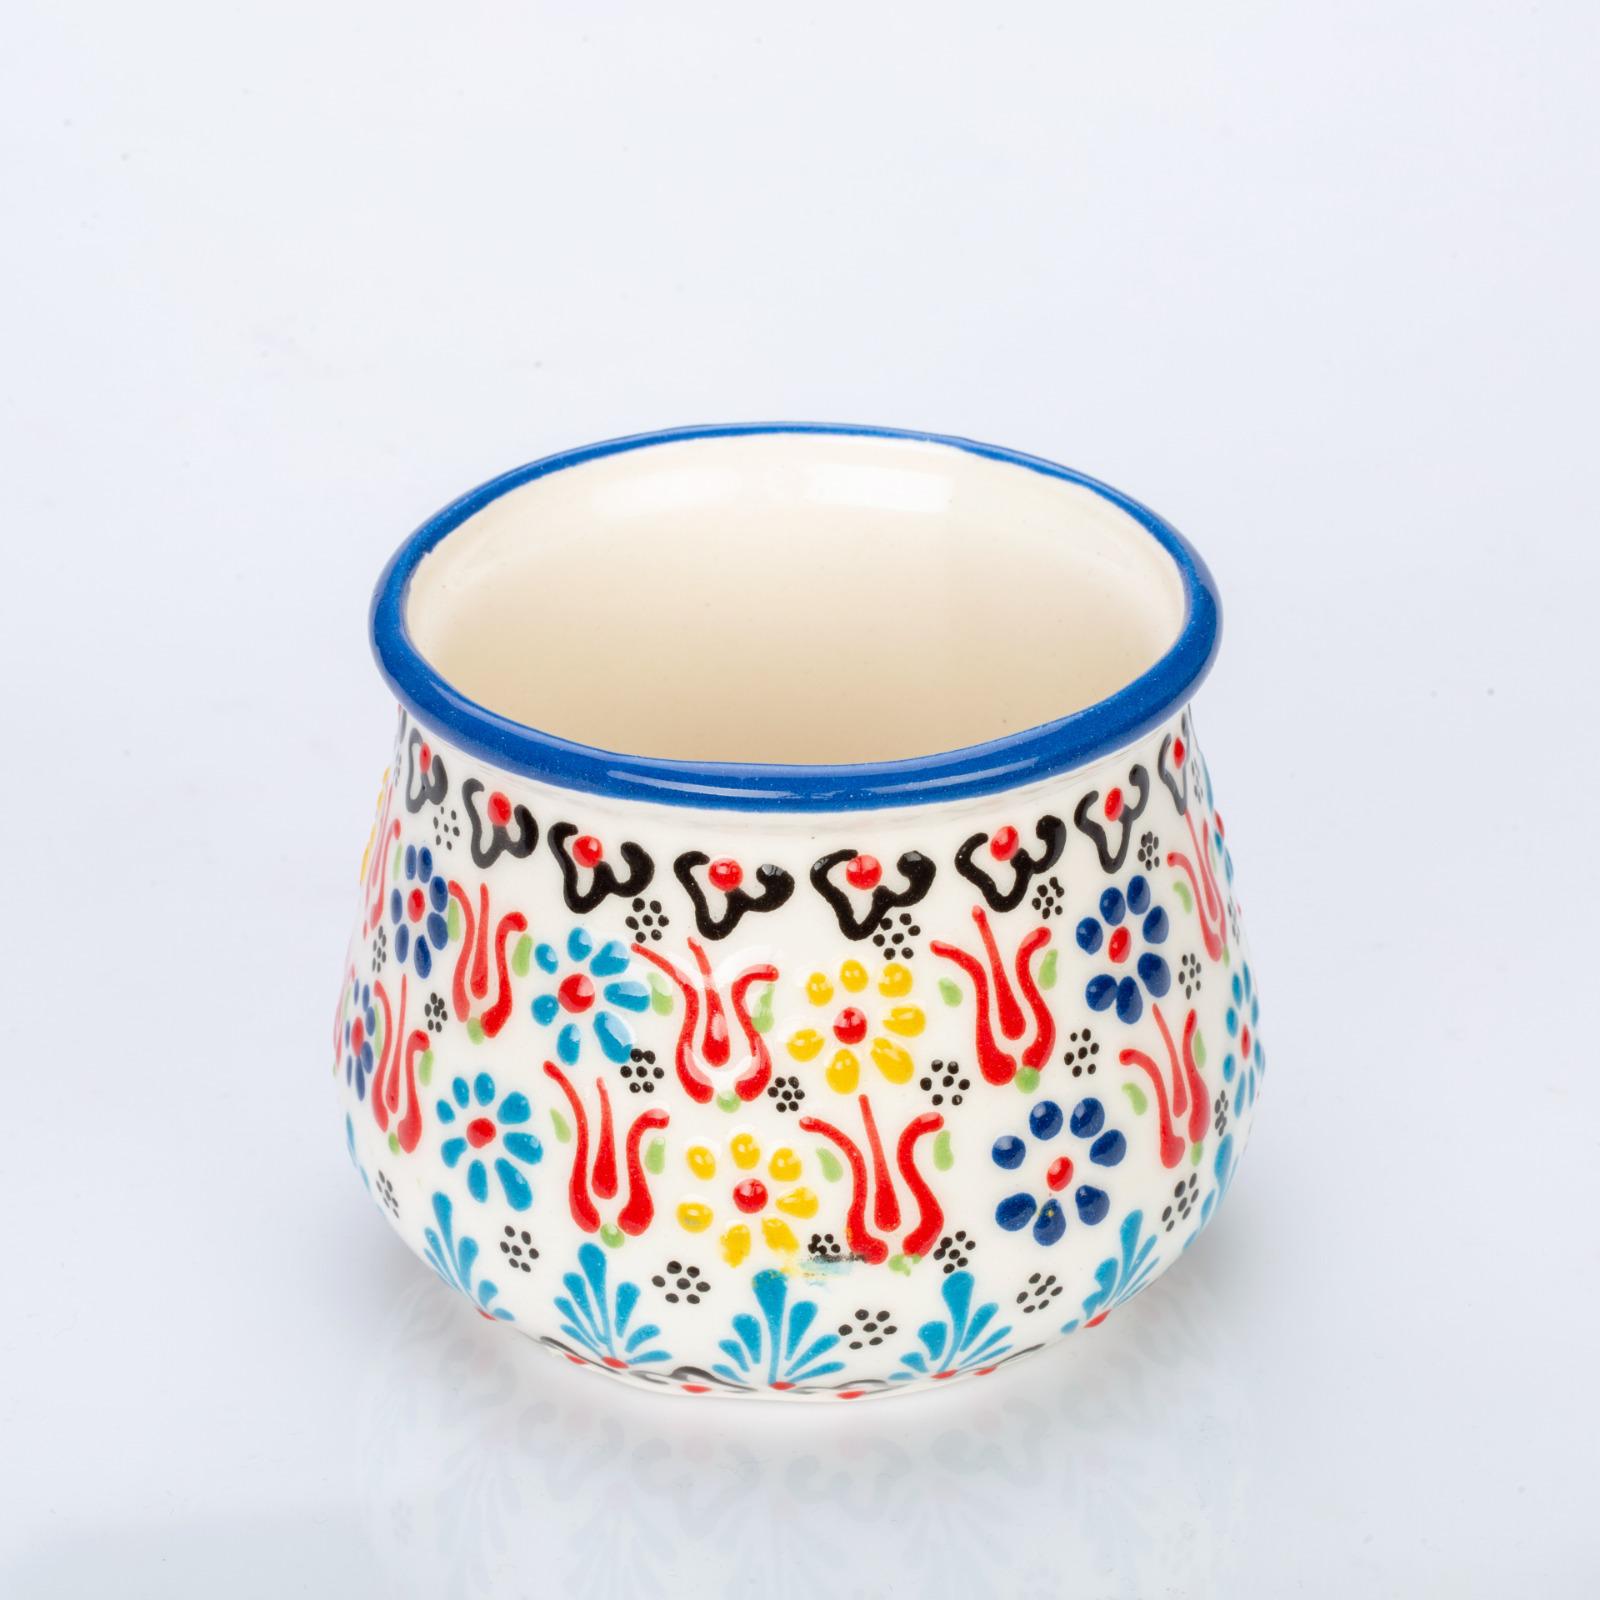 Candles in Ceramic Bowl